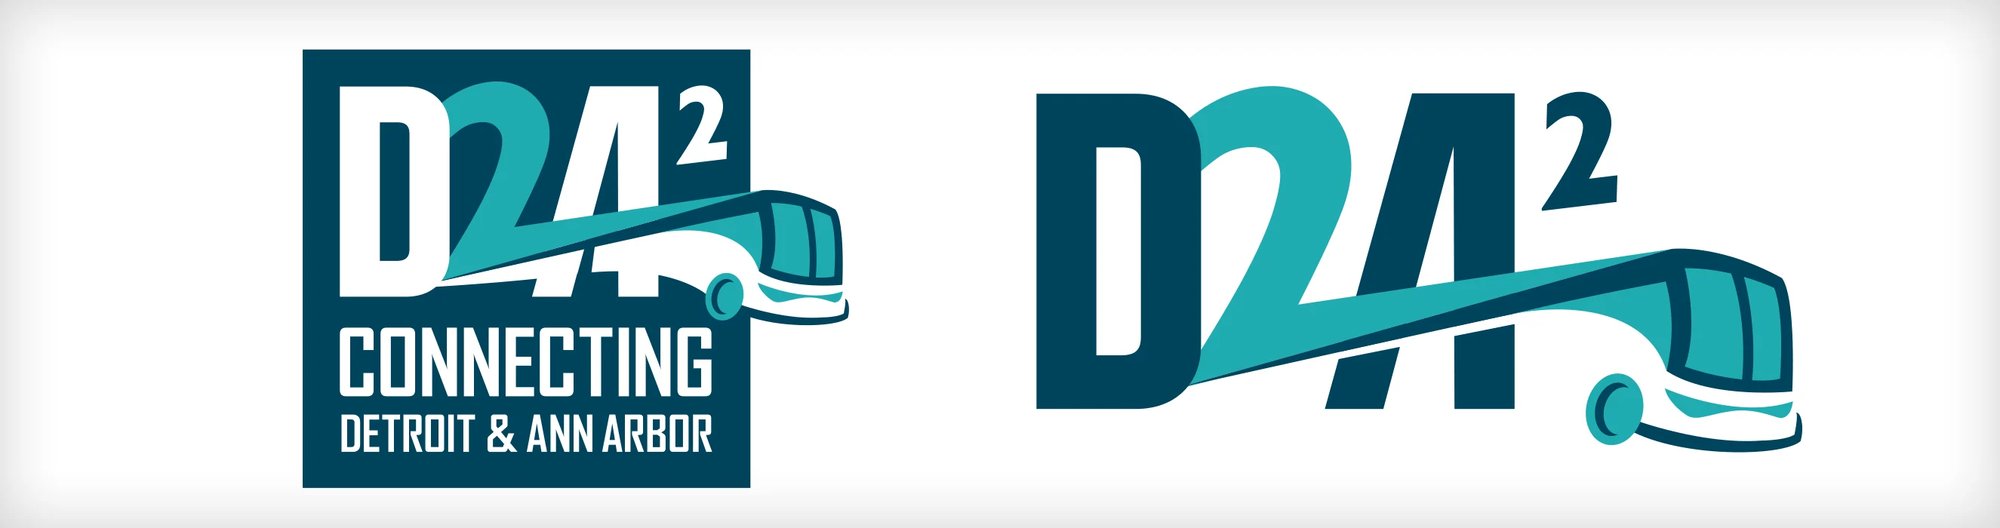 D2A2 logos